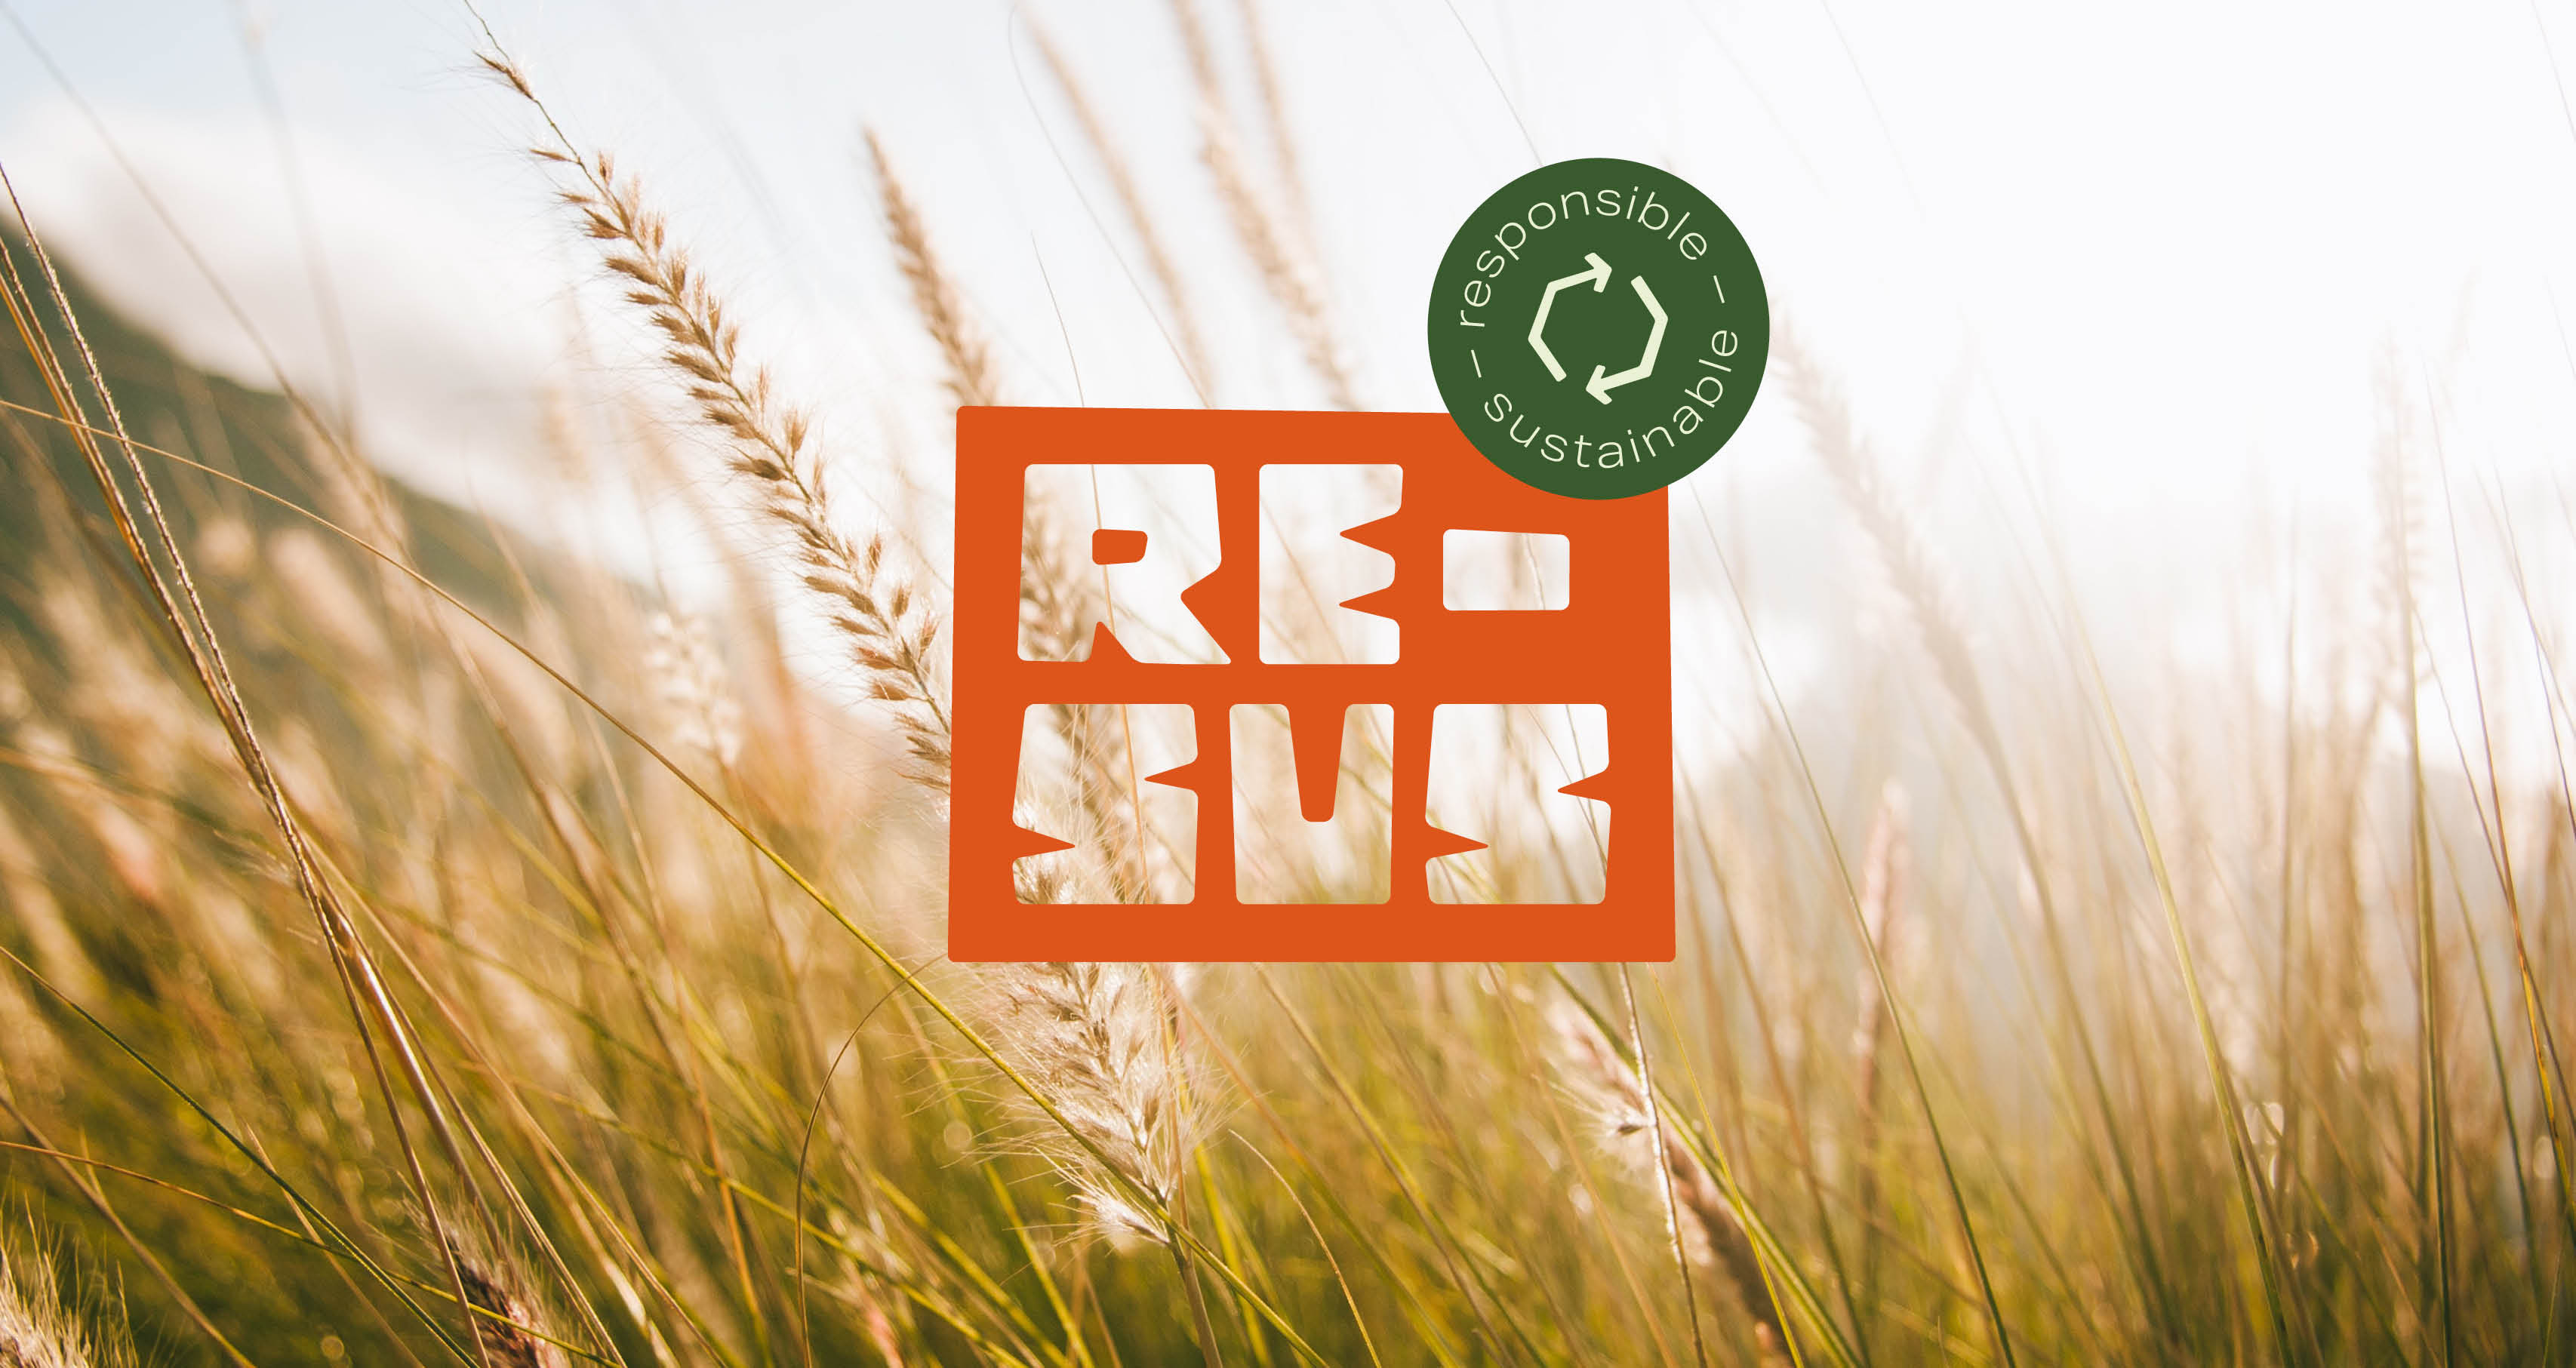 RESUS FOOD - Cameleon Creatives - Visuel identitet - Orange logo med sticker